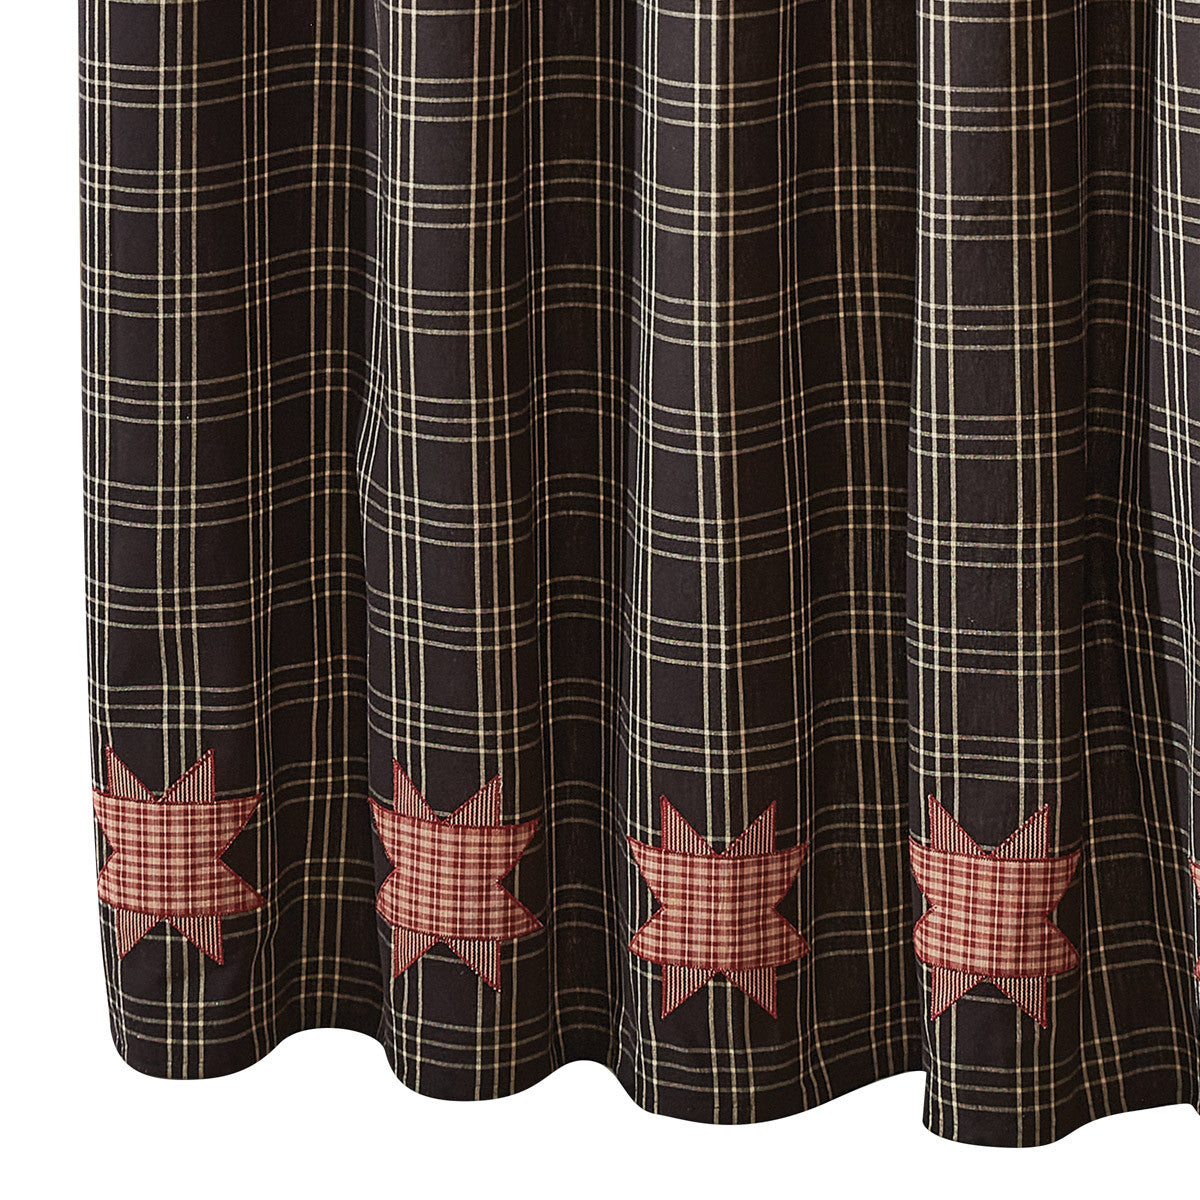 Farmhouse Star Shower Curtain 72" x 72" - Park Designs